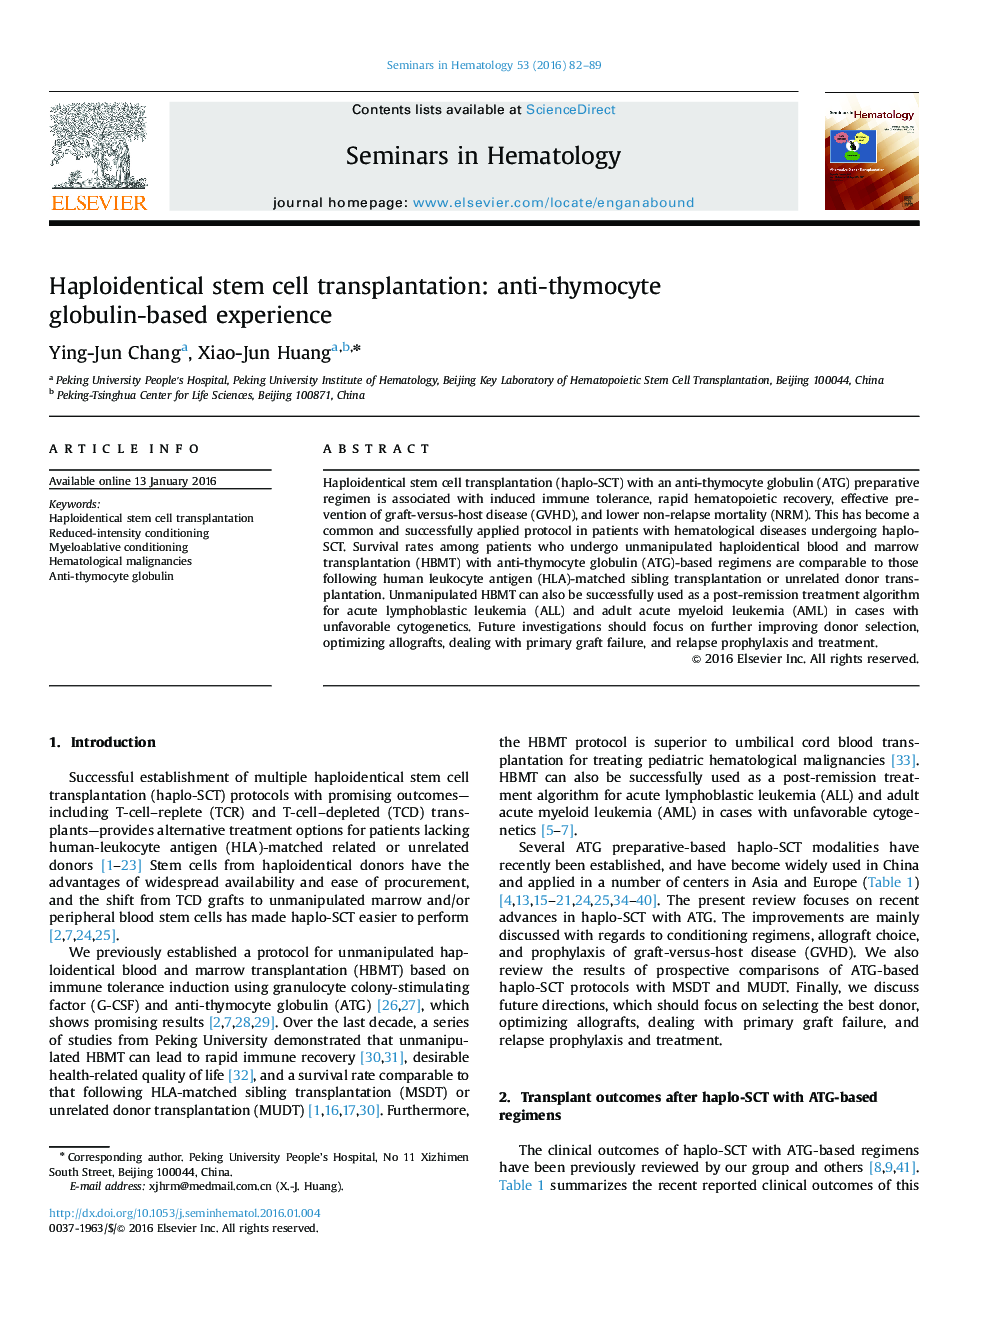 Haploidentical stem cell transplantation: anti-thymocyte globulin-based experience